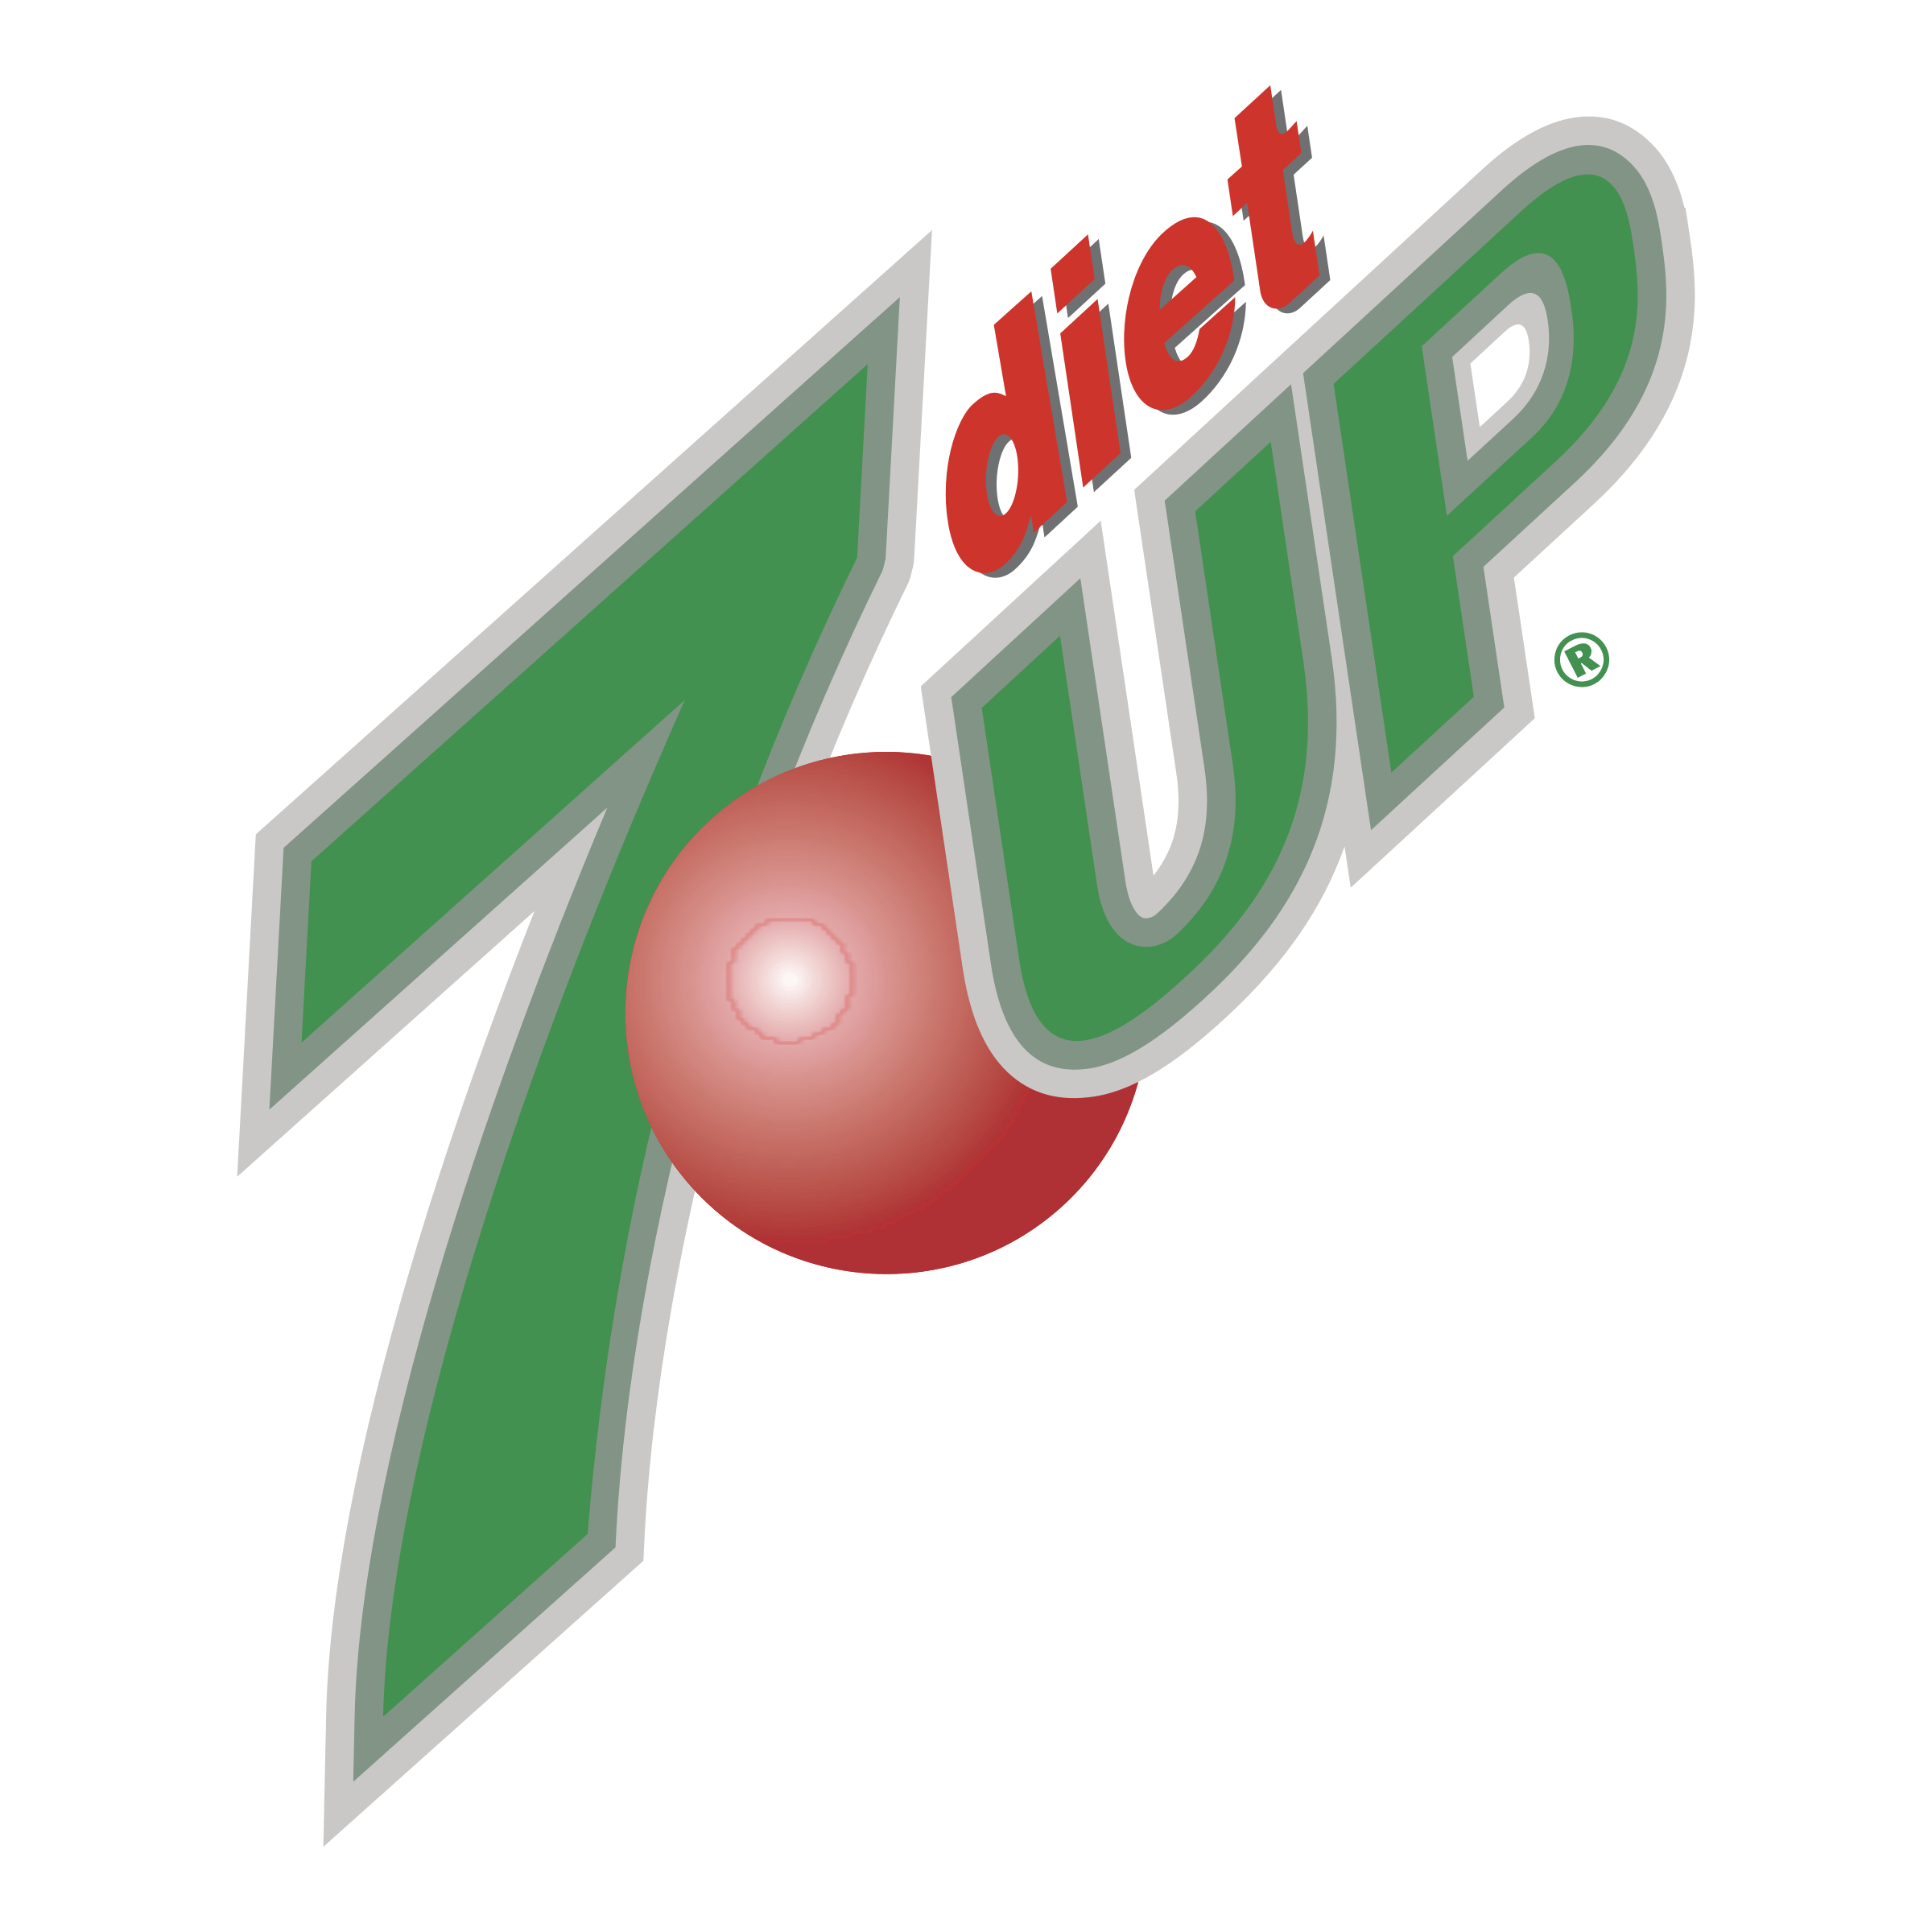 Diet 7Up Logo - 7up Diet Logo PNG Transparent & SVG Vector - Freebie Supply